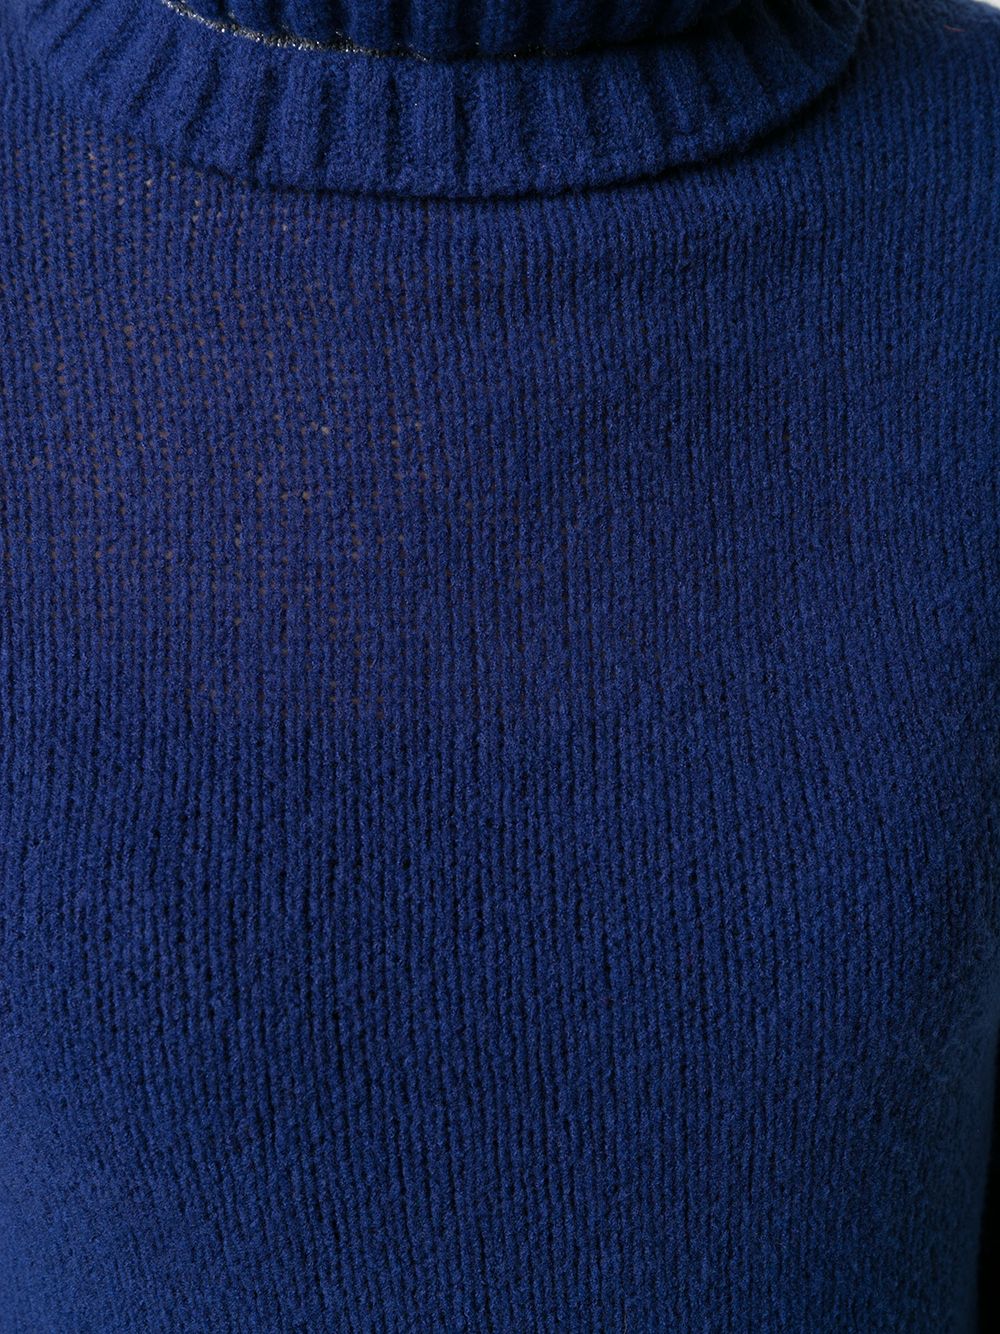 фото La Fileria For D'aniello свитер с высоким воротником